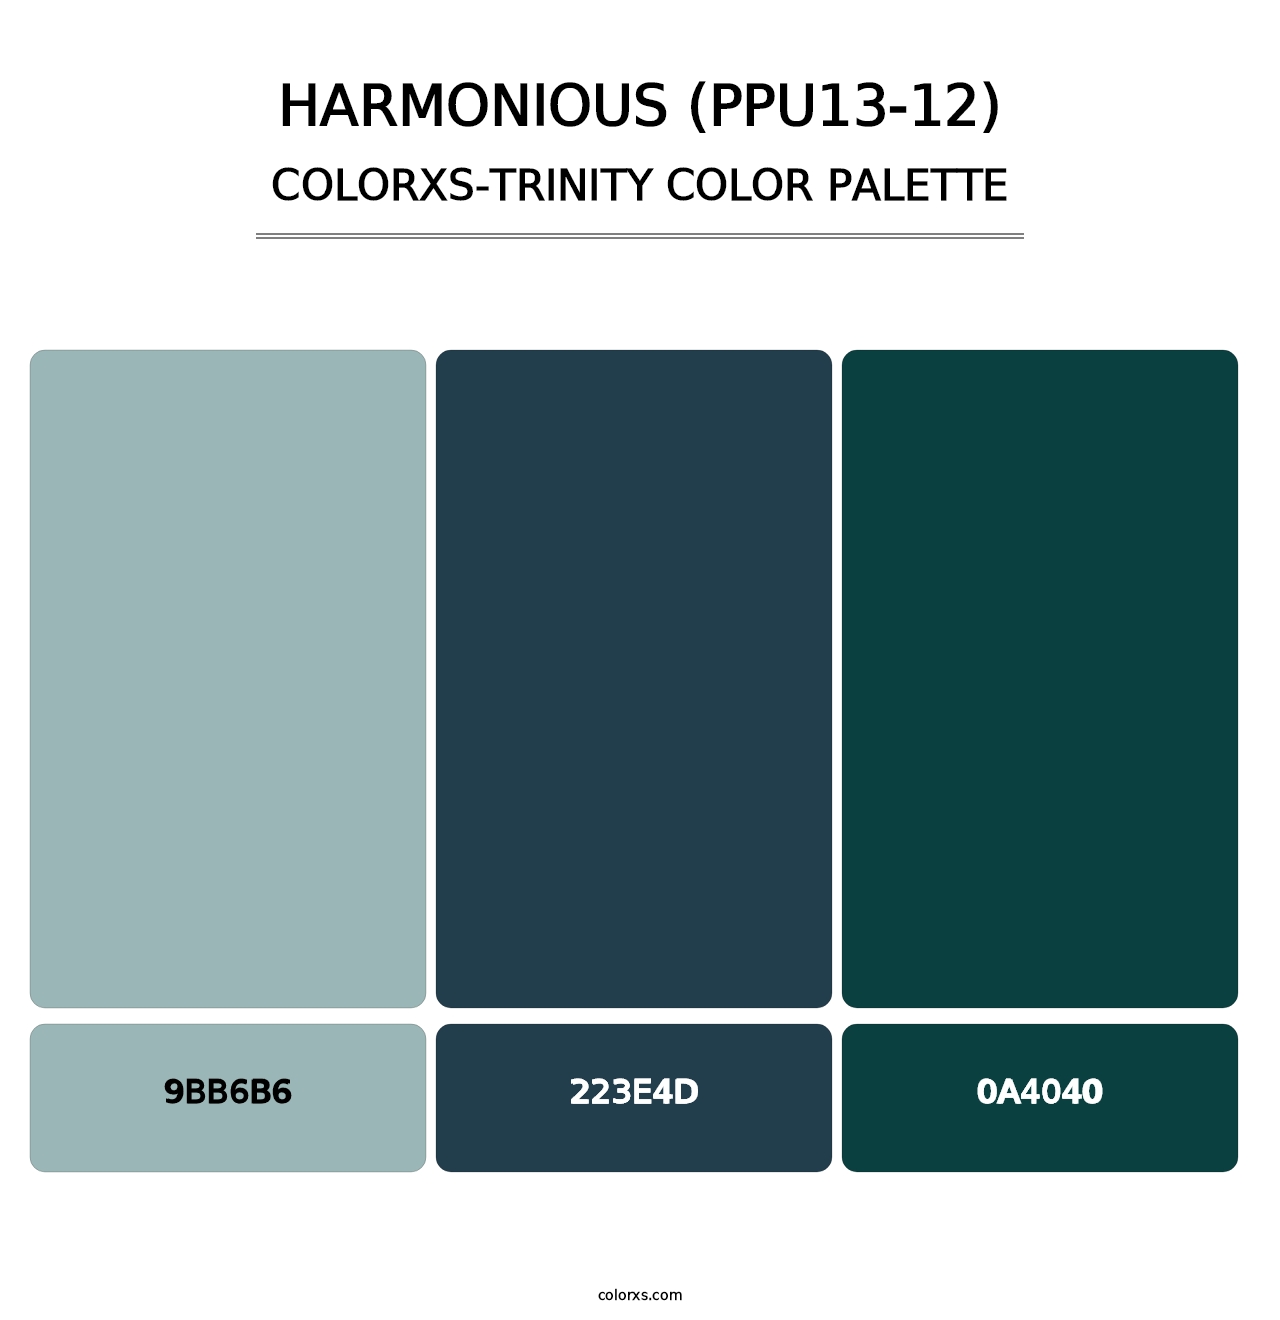 Harmonious (PPU13-12) - Colorxs Trinity Palette